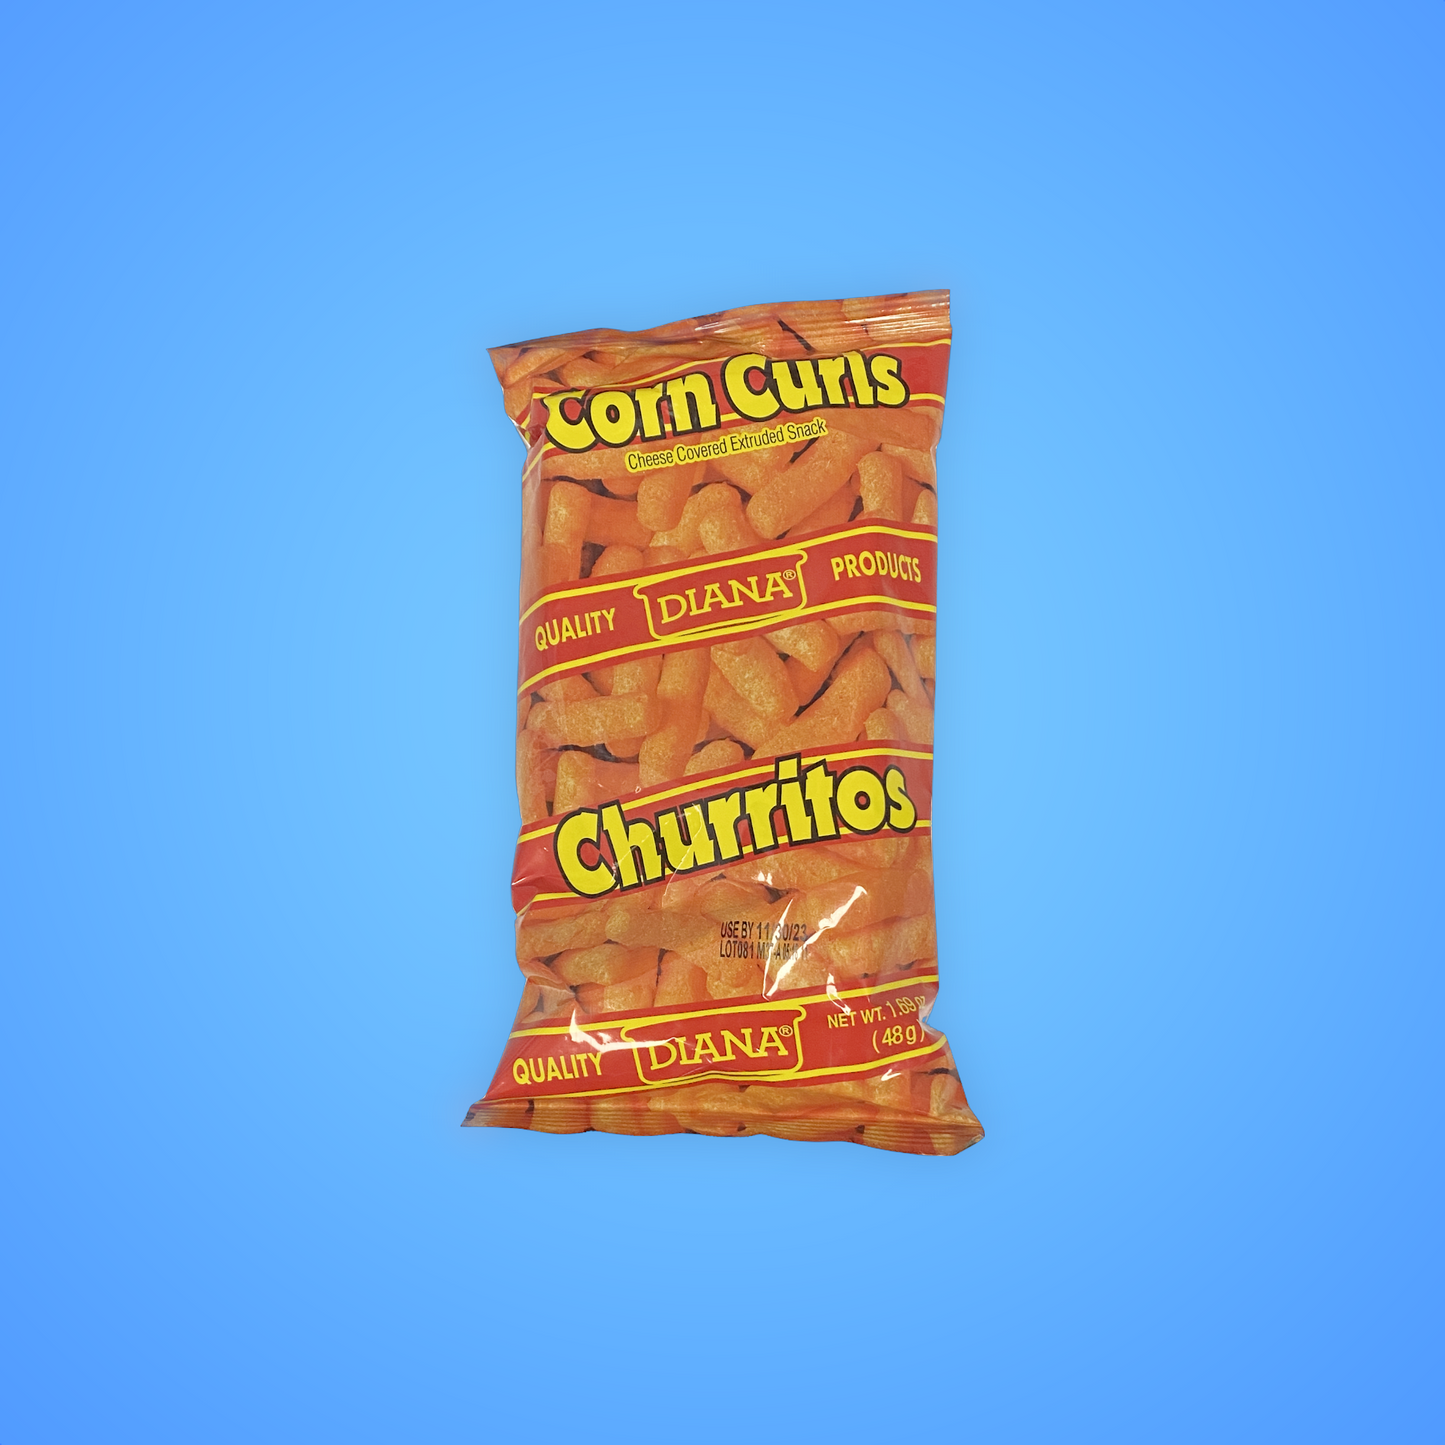 Churritos